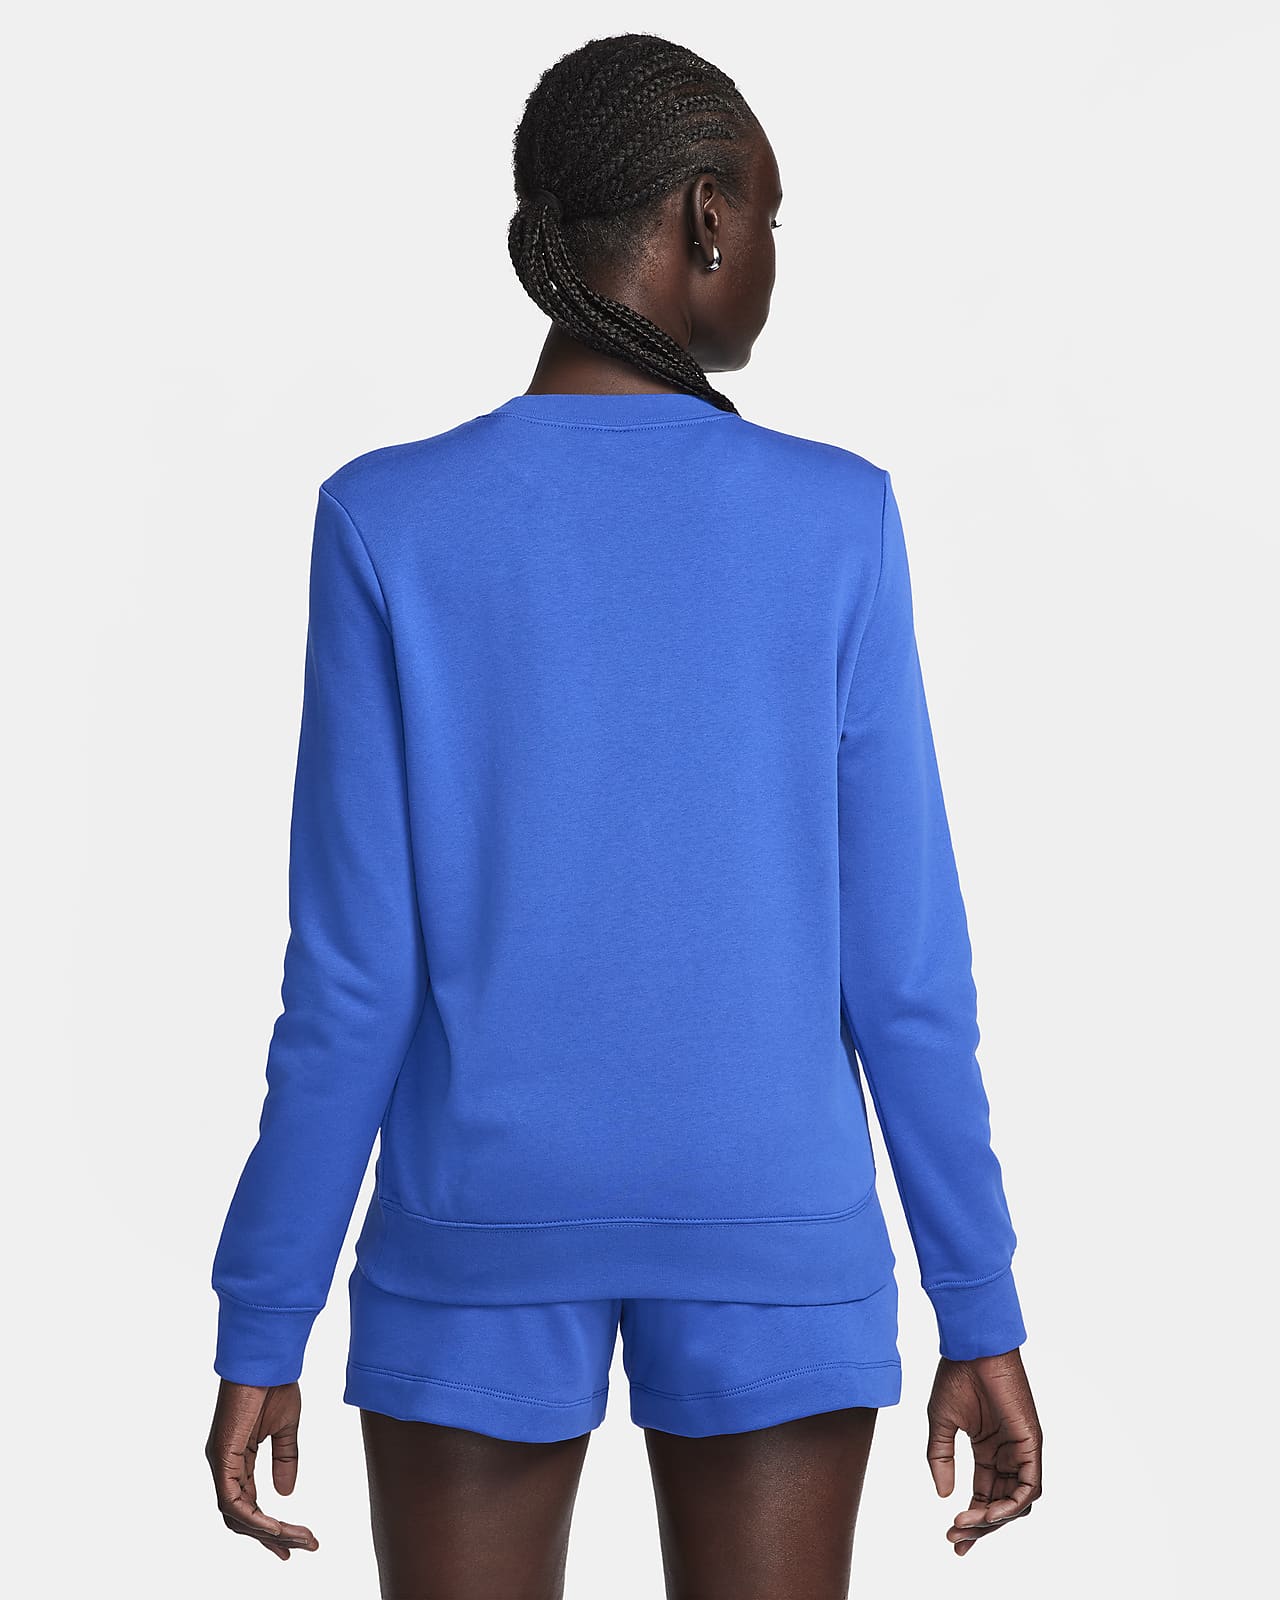 Brilliant Basics Women's Fleece Crew Neck Sweater - Black - Size Small